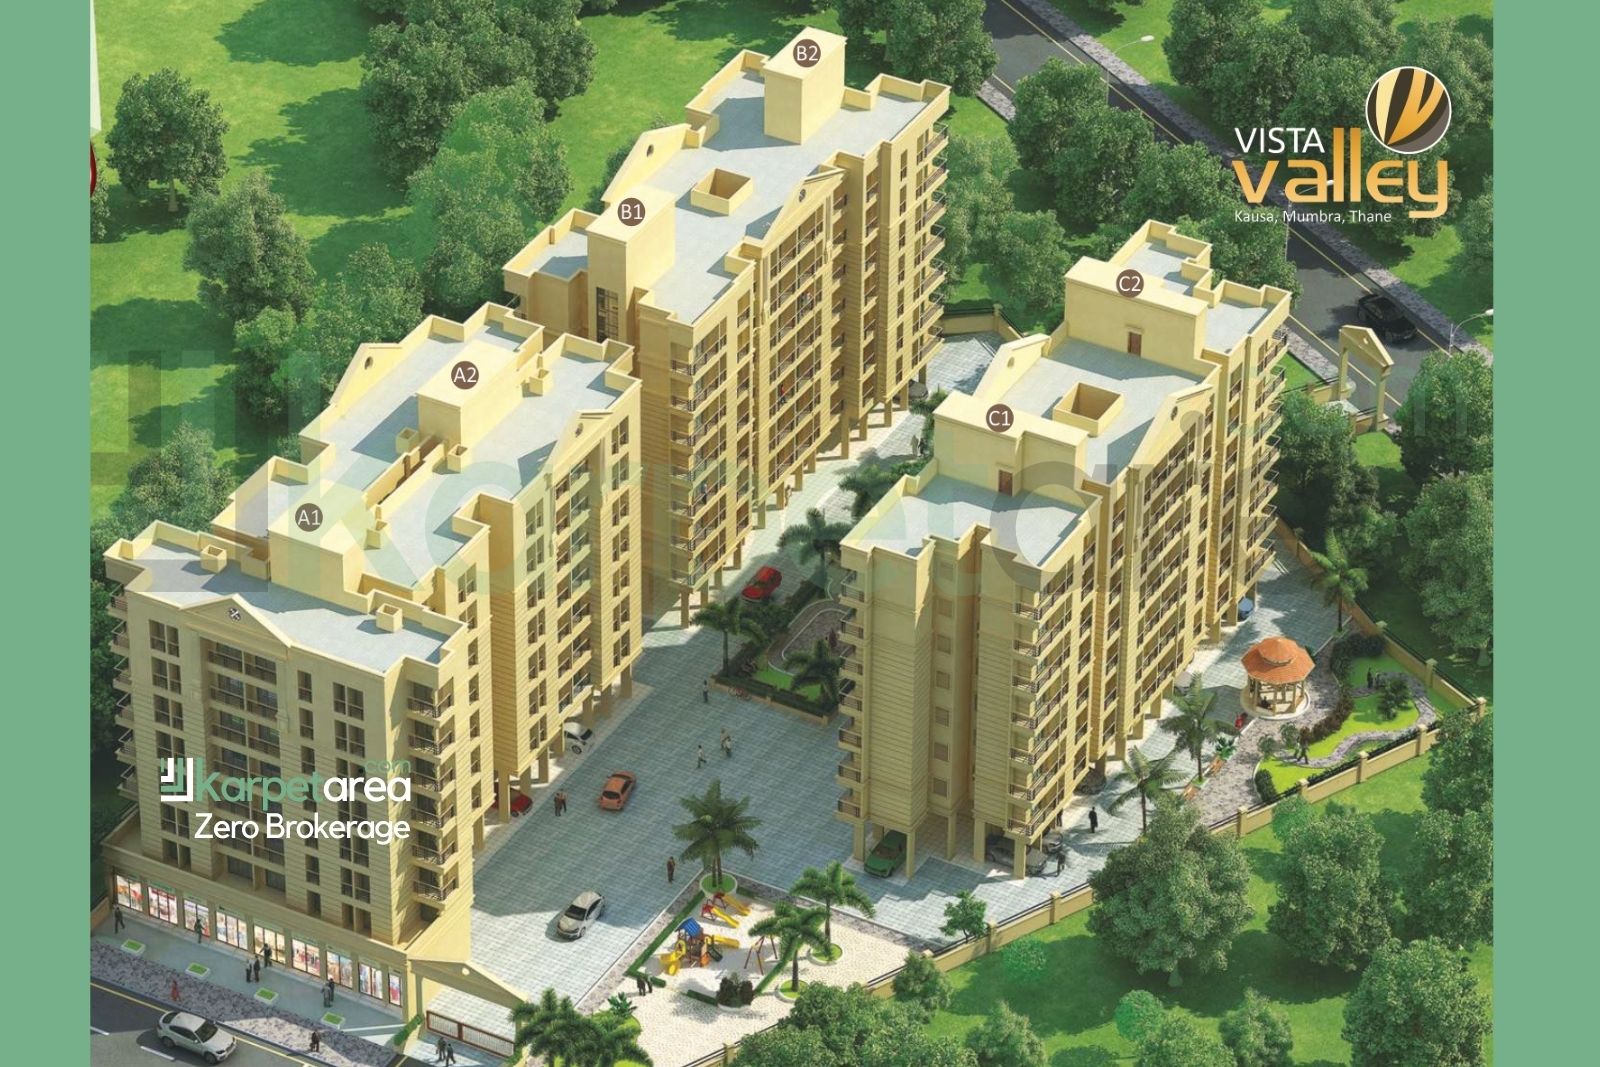 1 BHK, 2 BHK & 3 BHK Premium Apartments at Vista Valley near Sukoon Heights in Kausa, Mumbra, Thane 400612